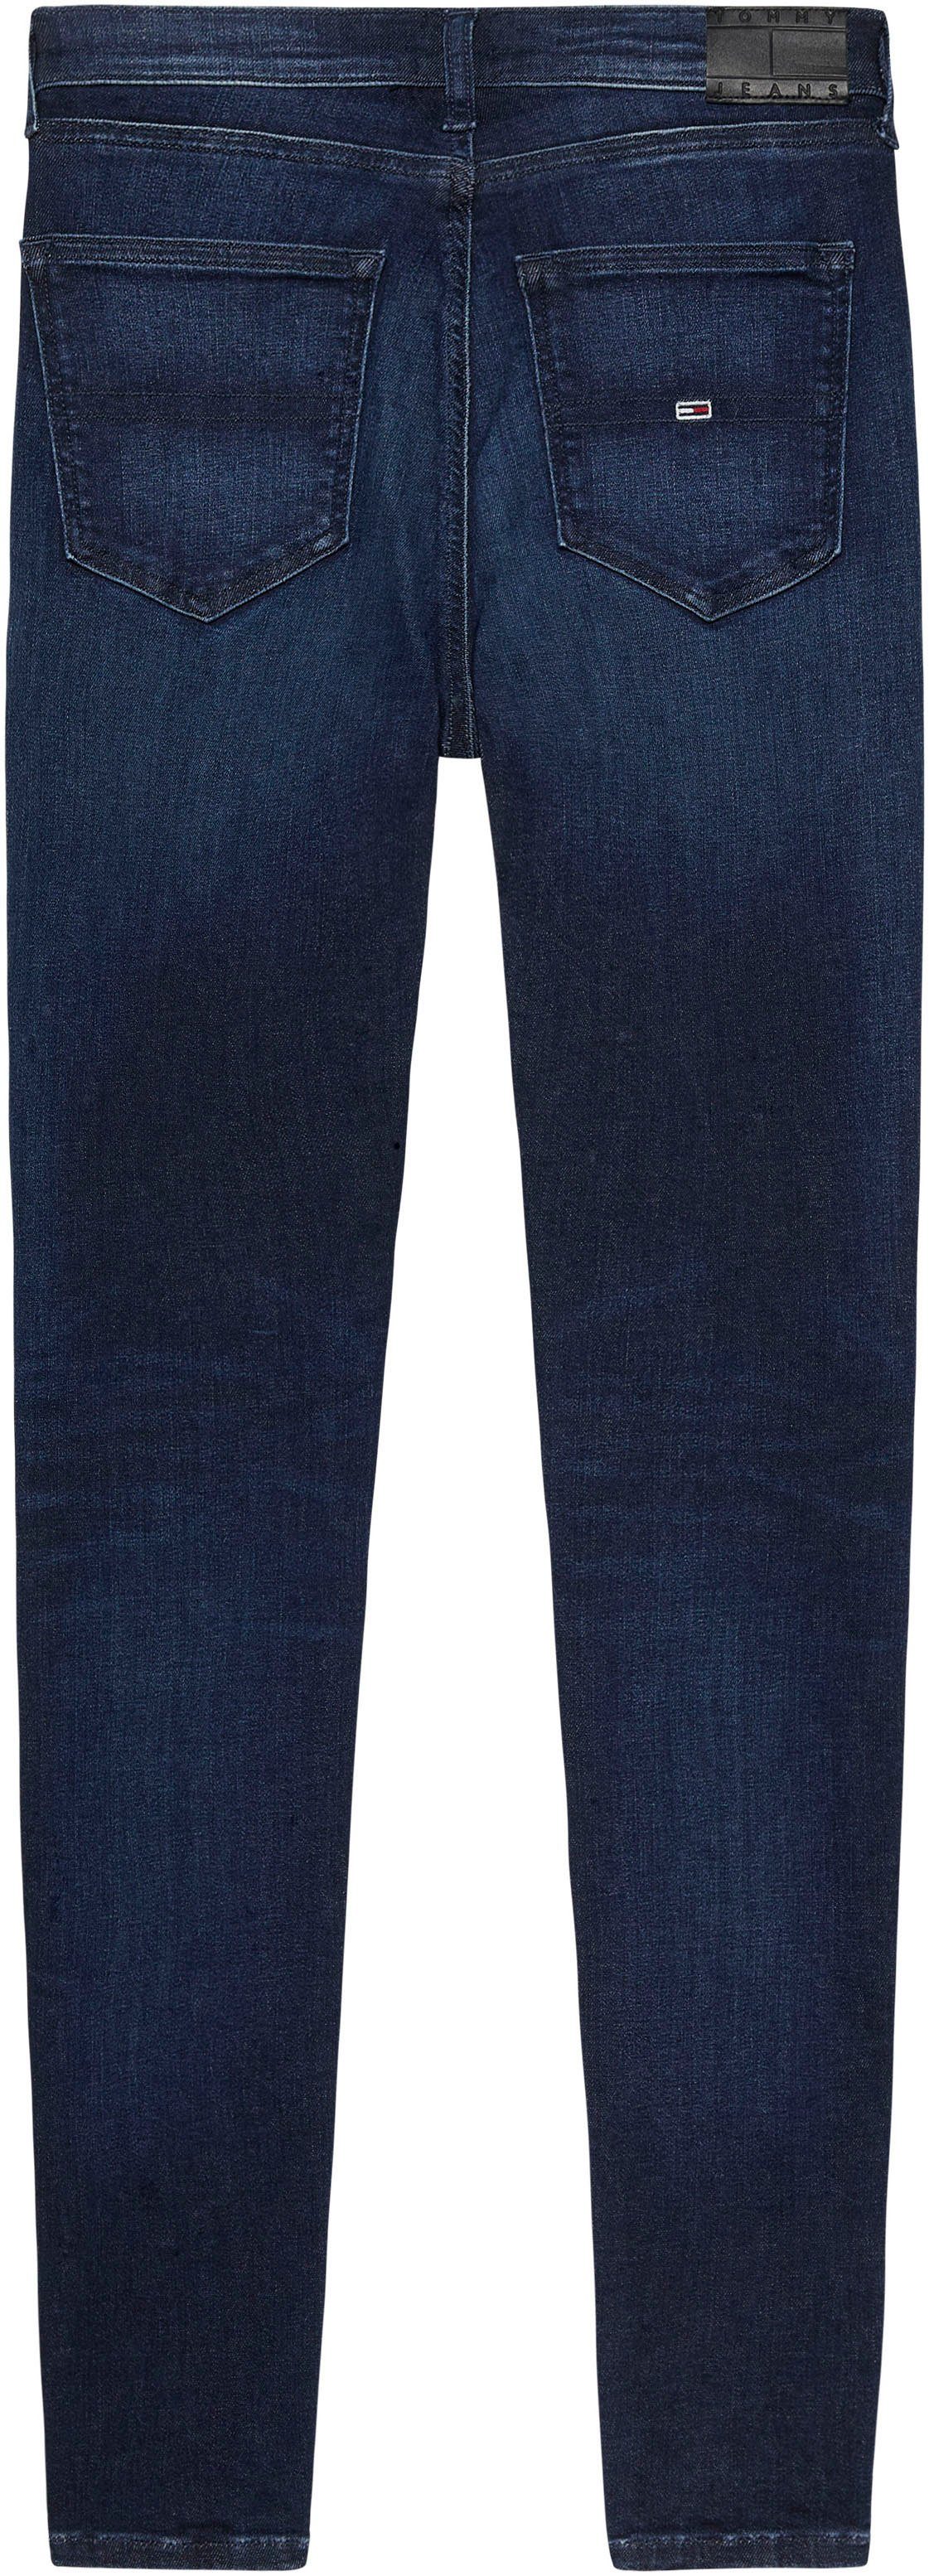 Tommy Jeans Bequeme Jeans mit Ledermarkenlabel Denim Sylvia Dark1